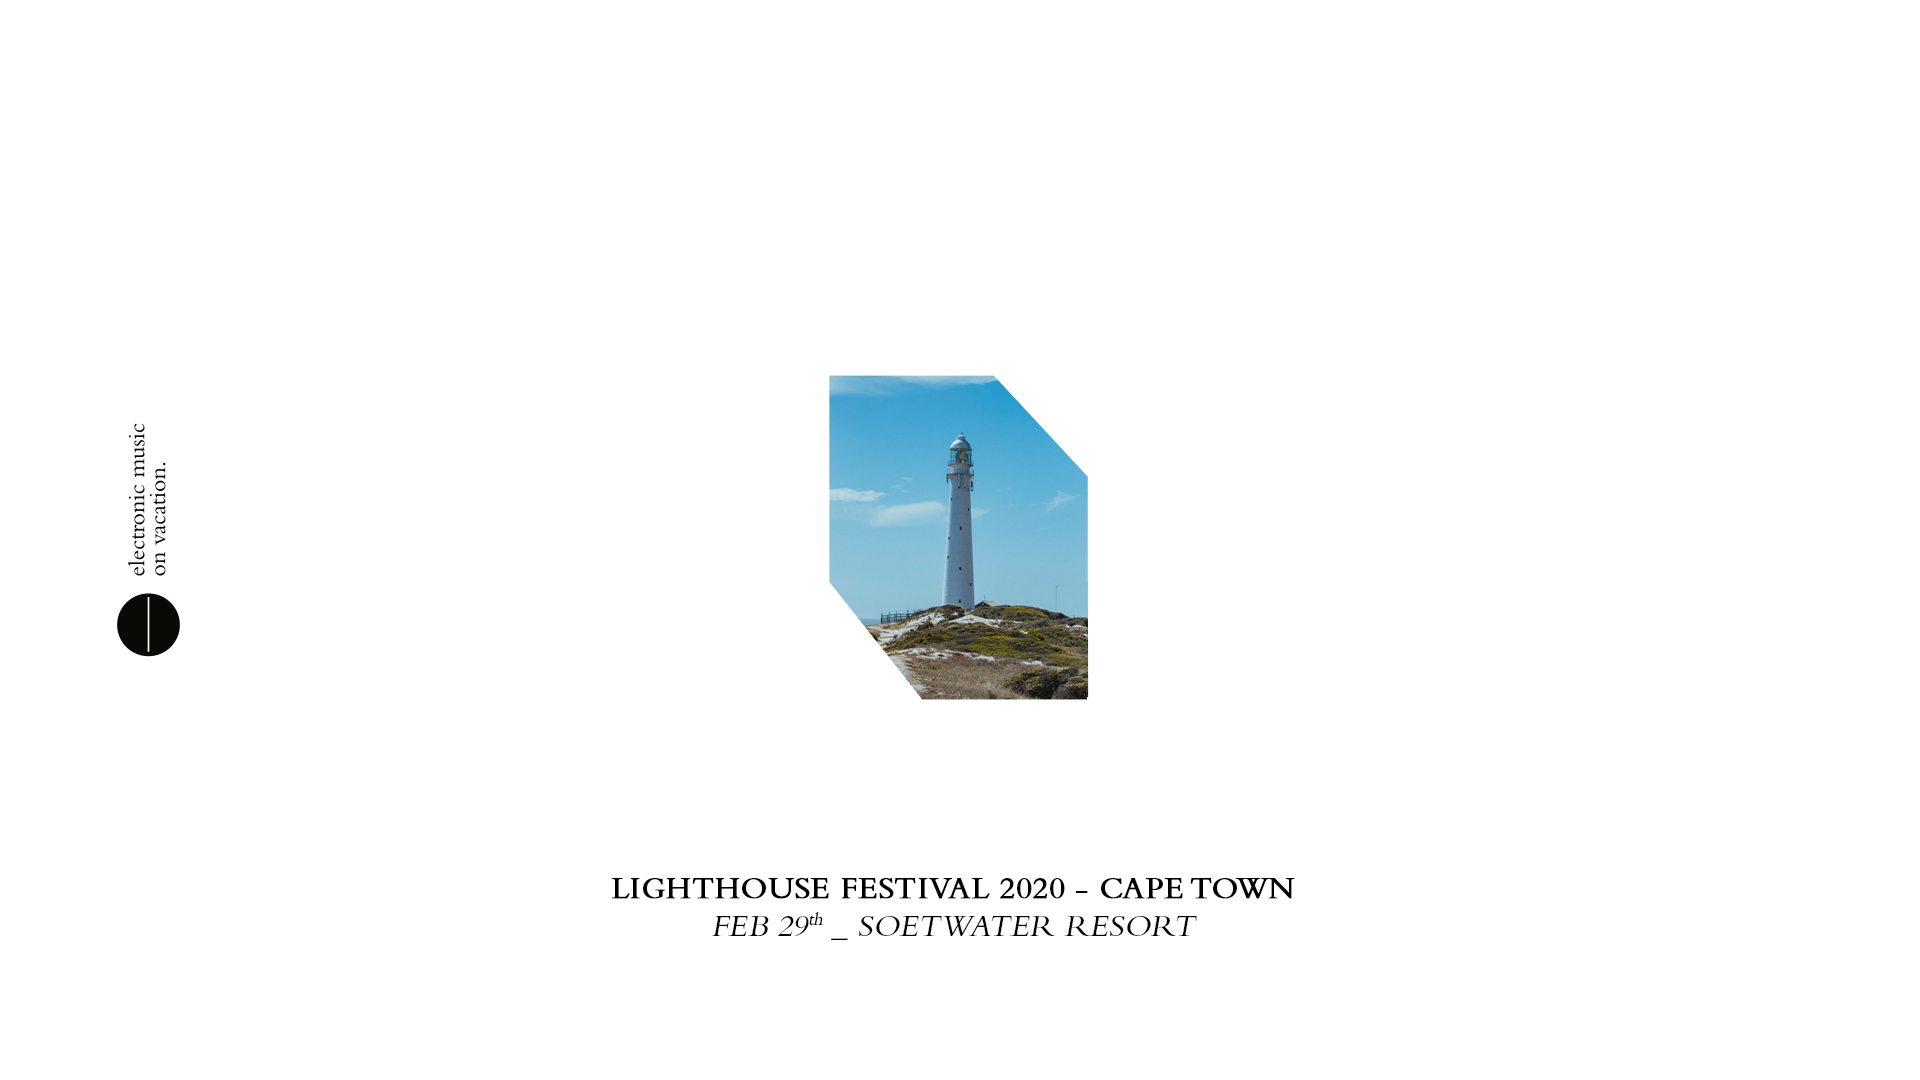 Lighthouse Festival 2020 - South Africa